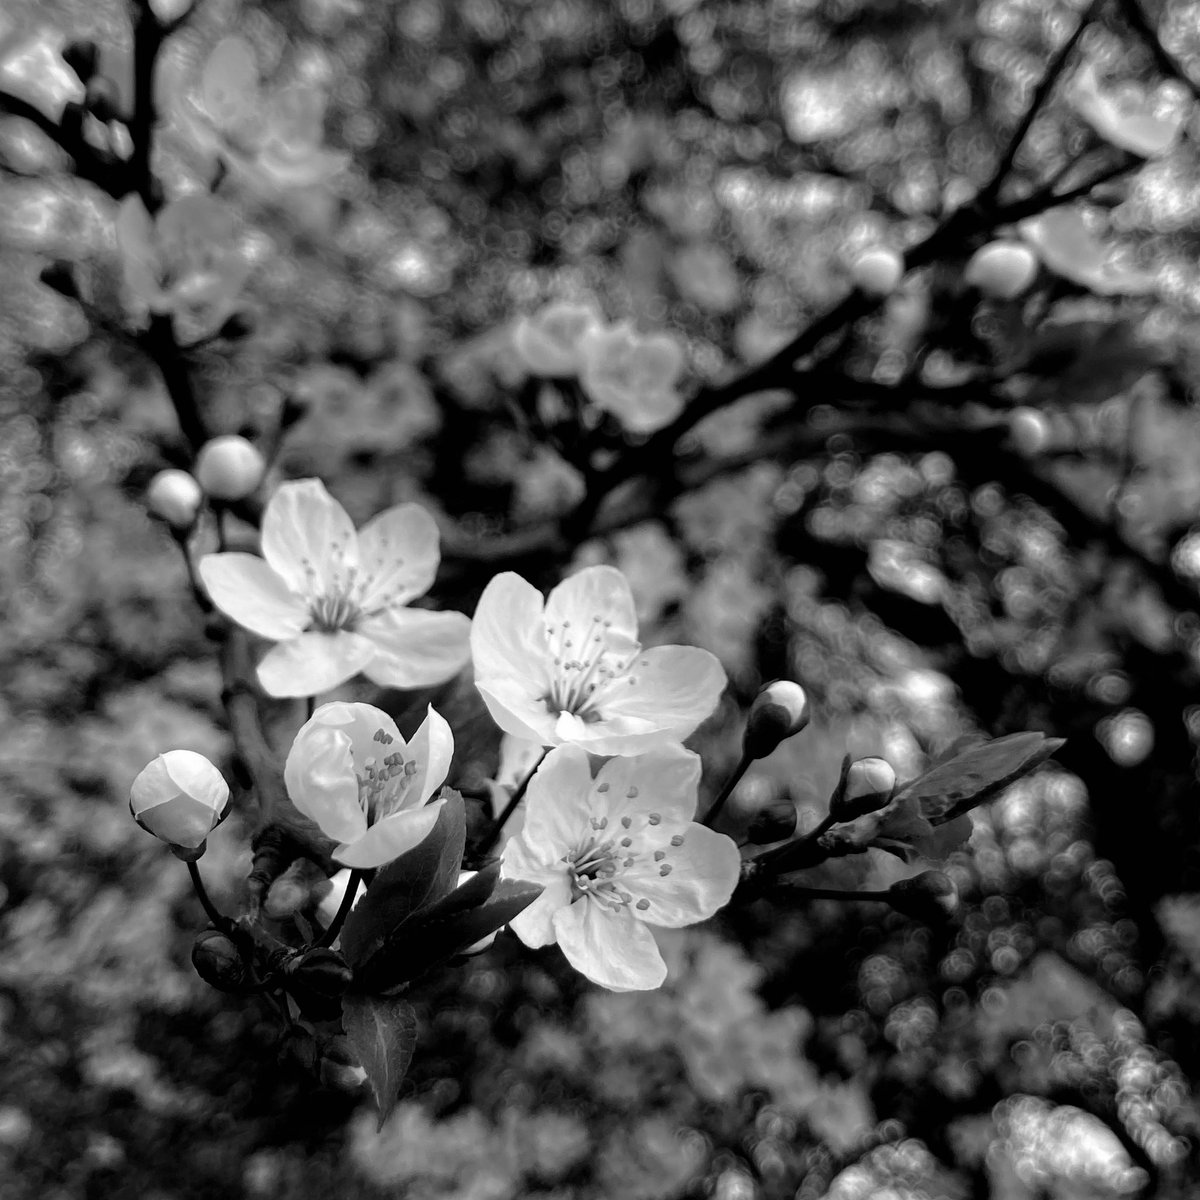 Breaking Through #cherryblossom #sakura #londoninspring #blackandwhite #iphonography #monochrome